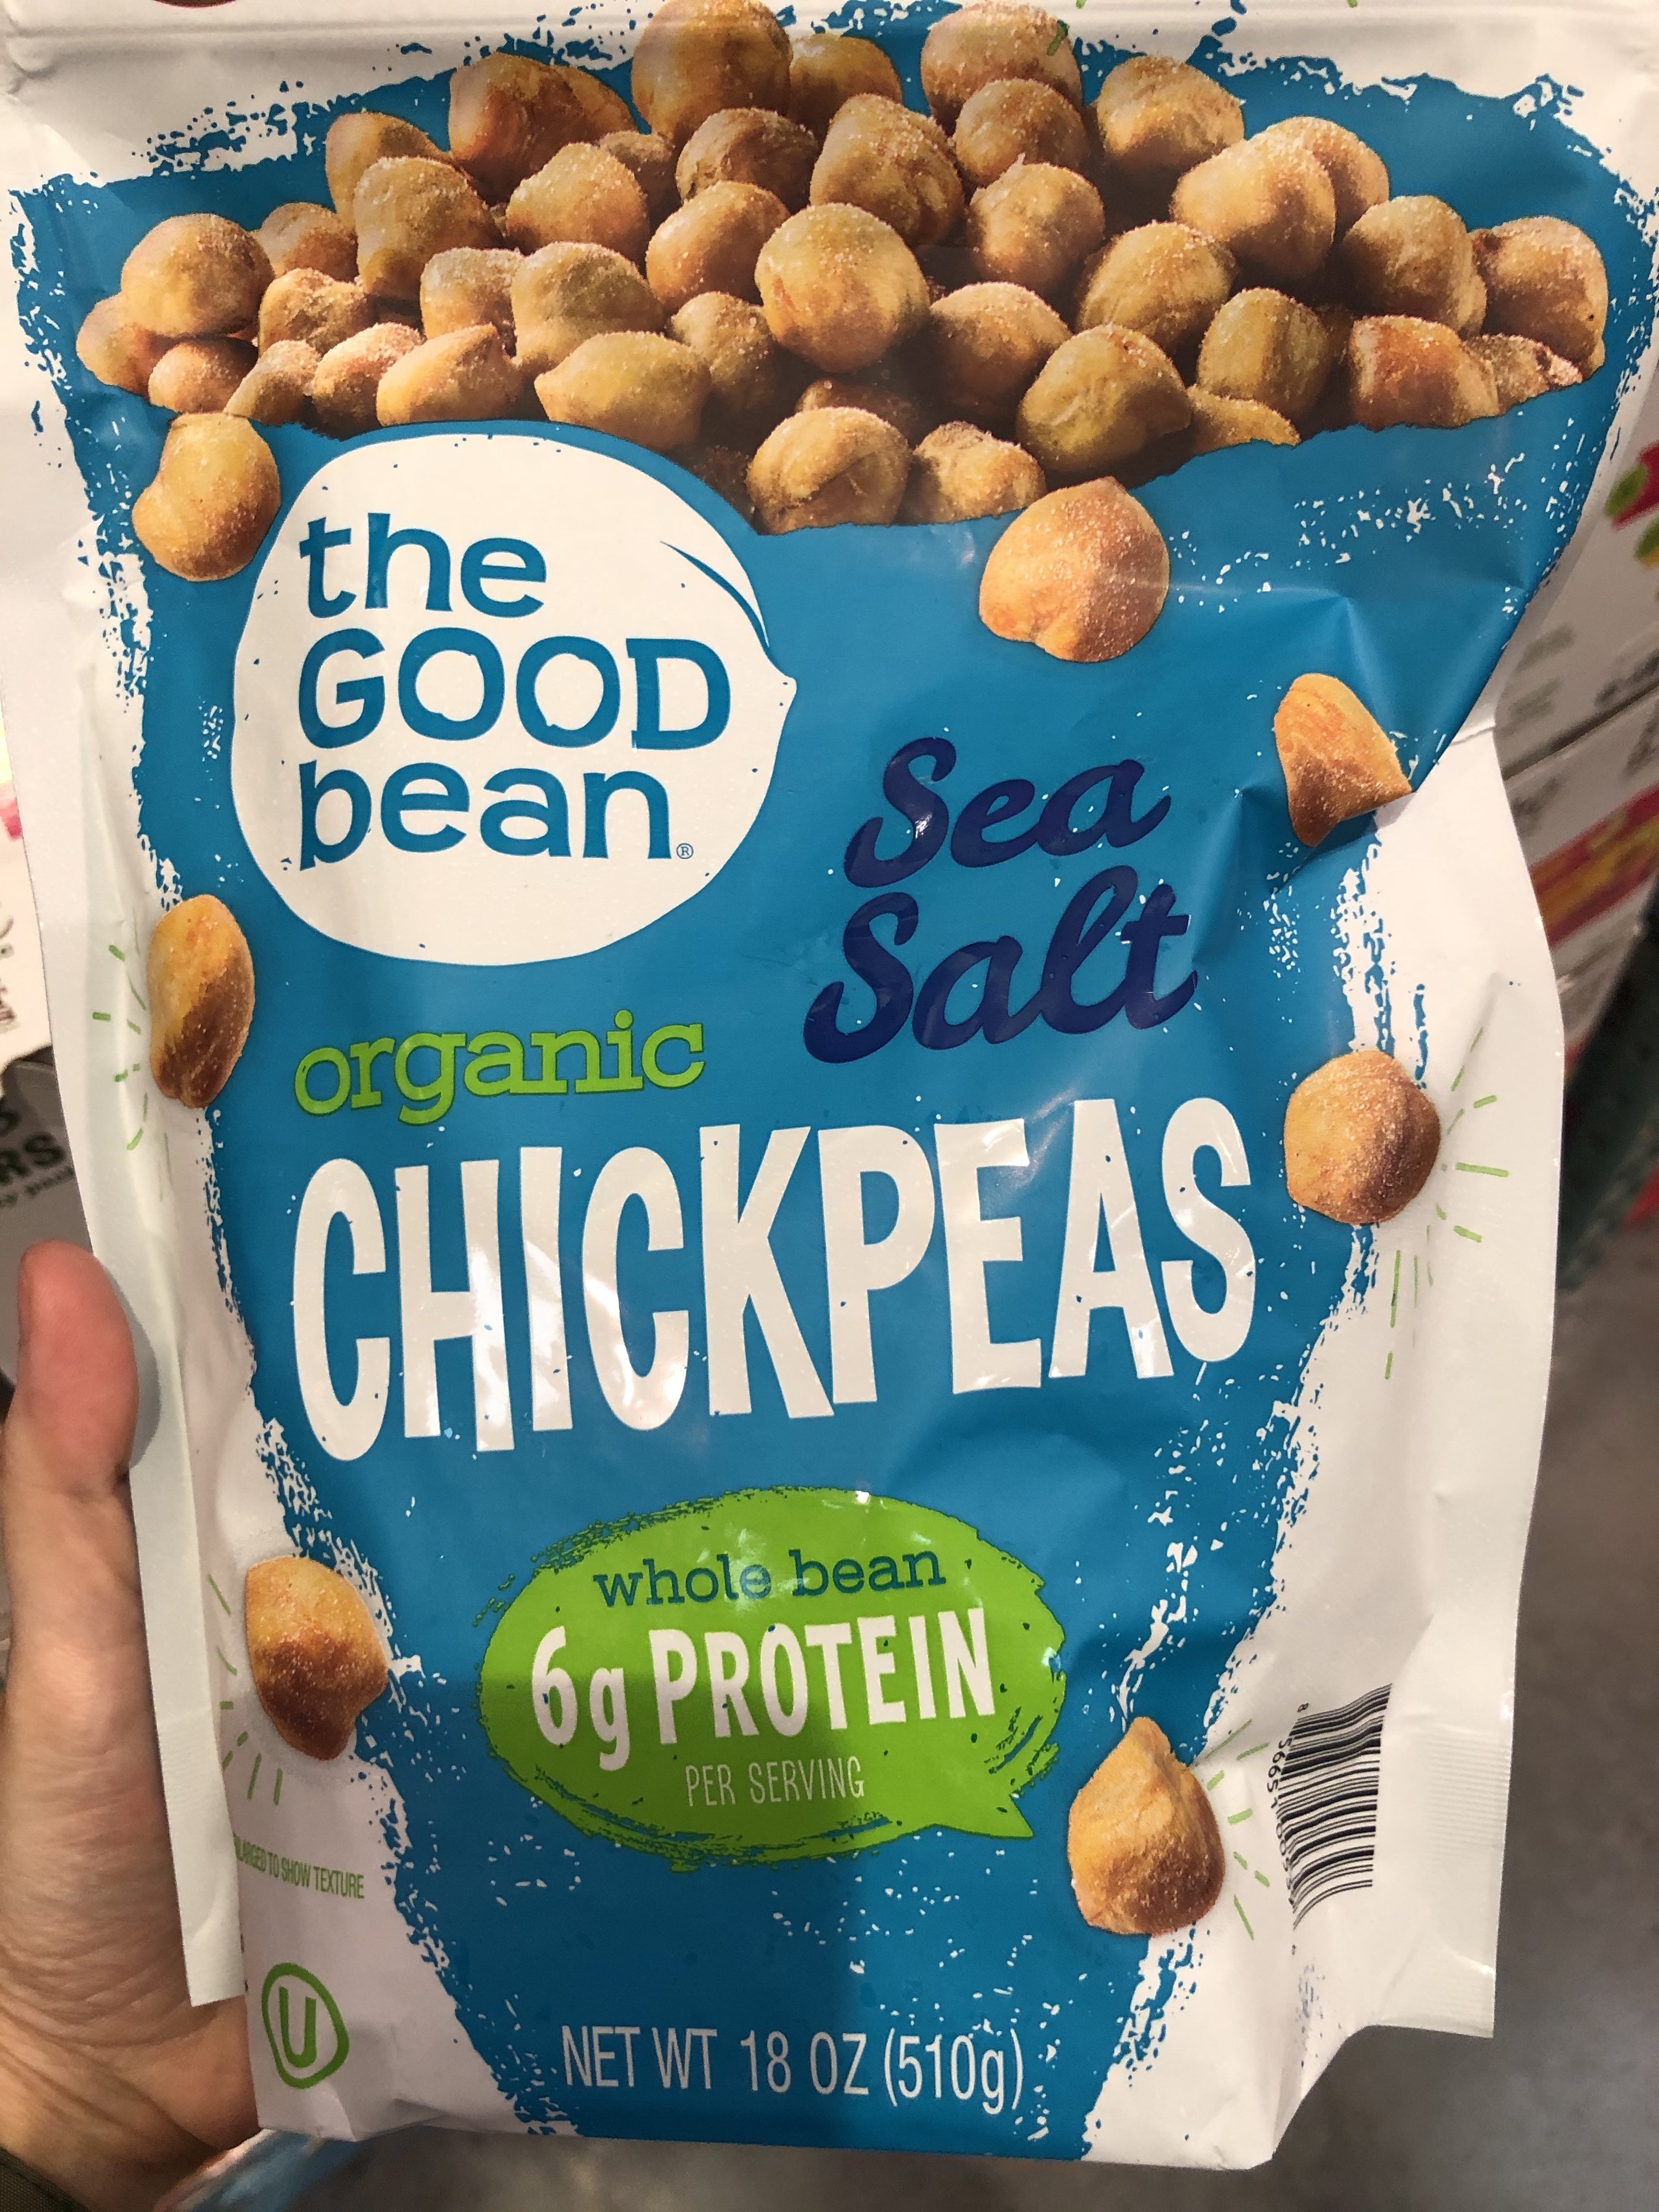 A bag of The Good Bean organic chickpeas